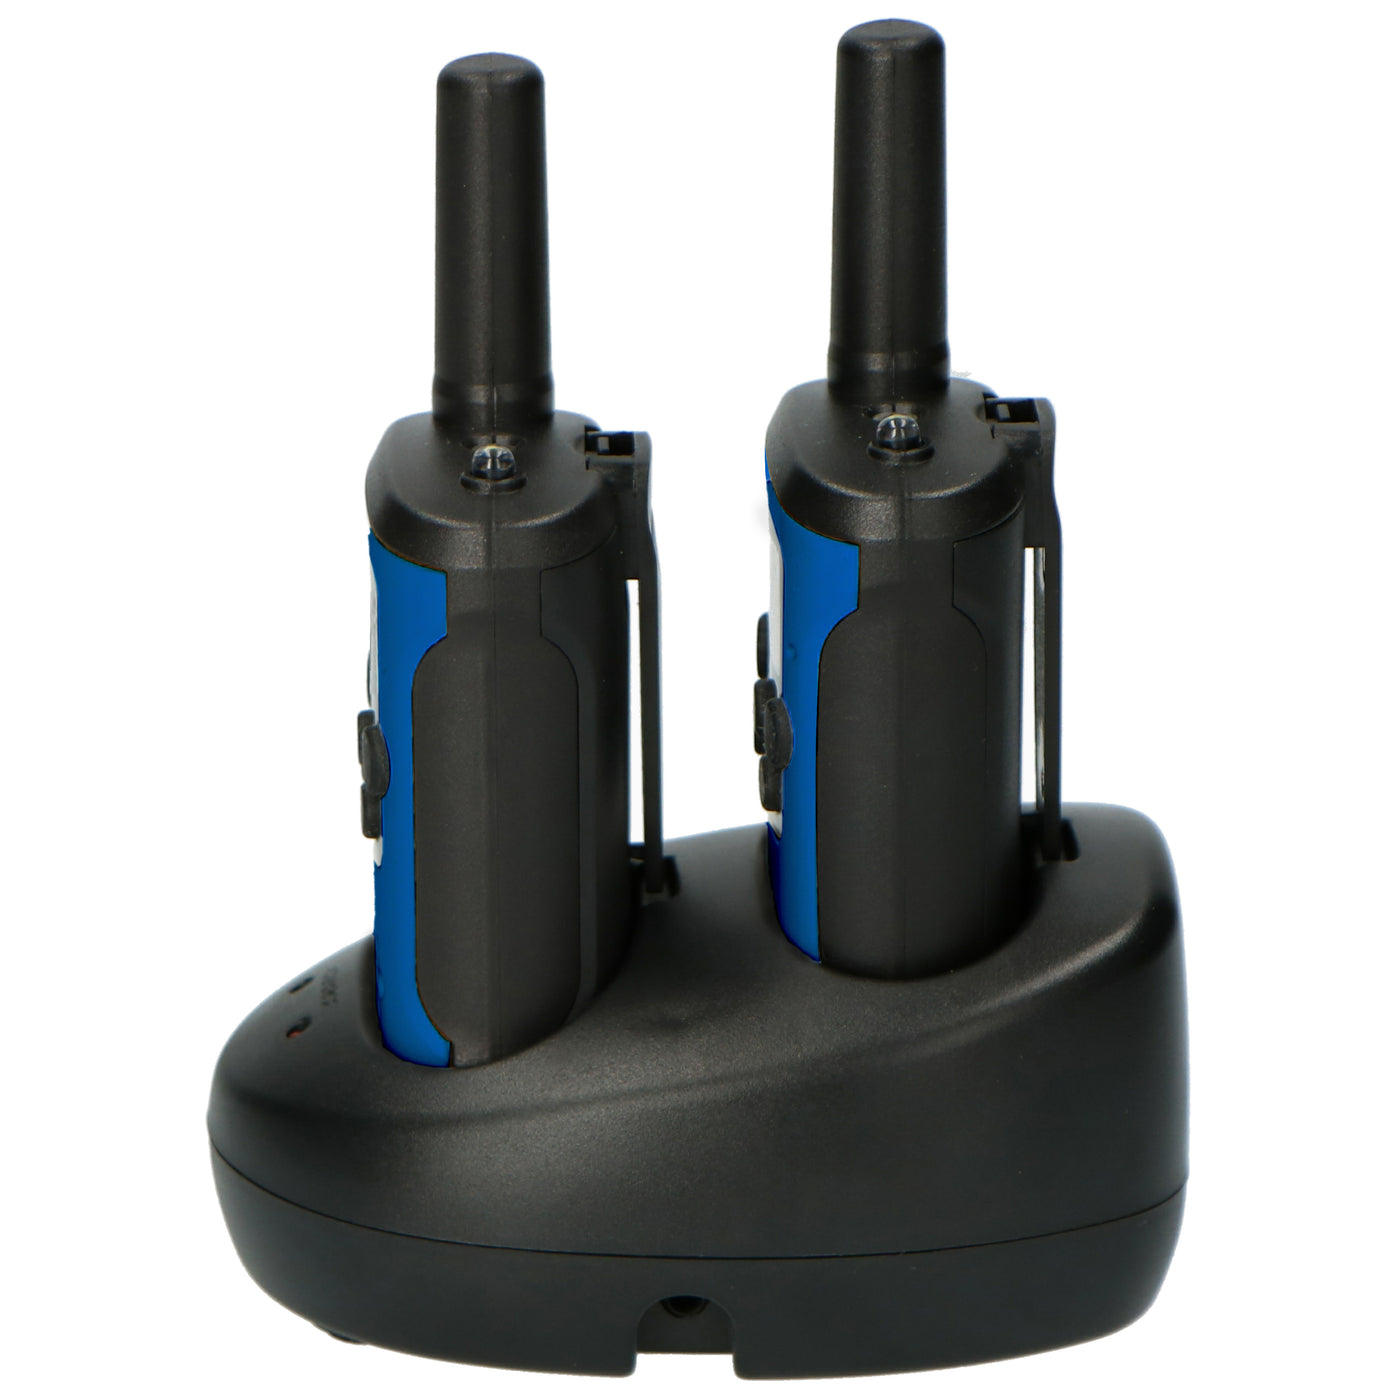 Alecto FR-175BW - Set van twee walkie talkies, tot 7 kilometer bereik, blauw/zwart